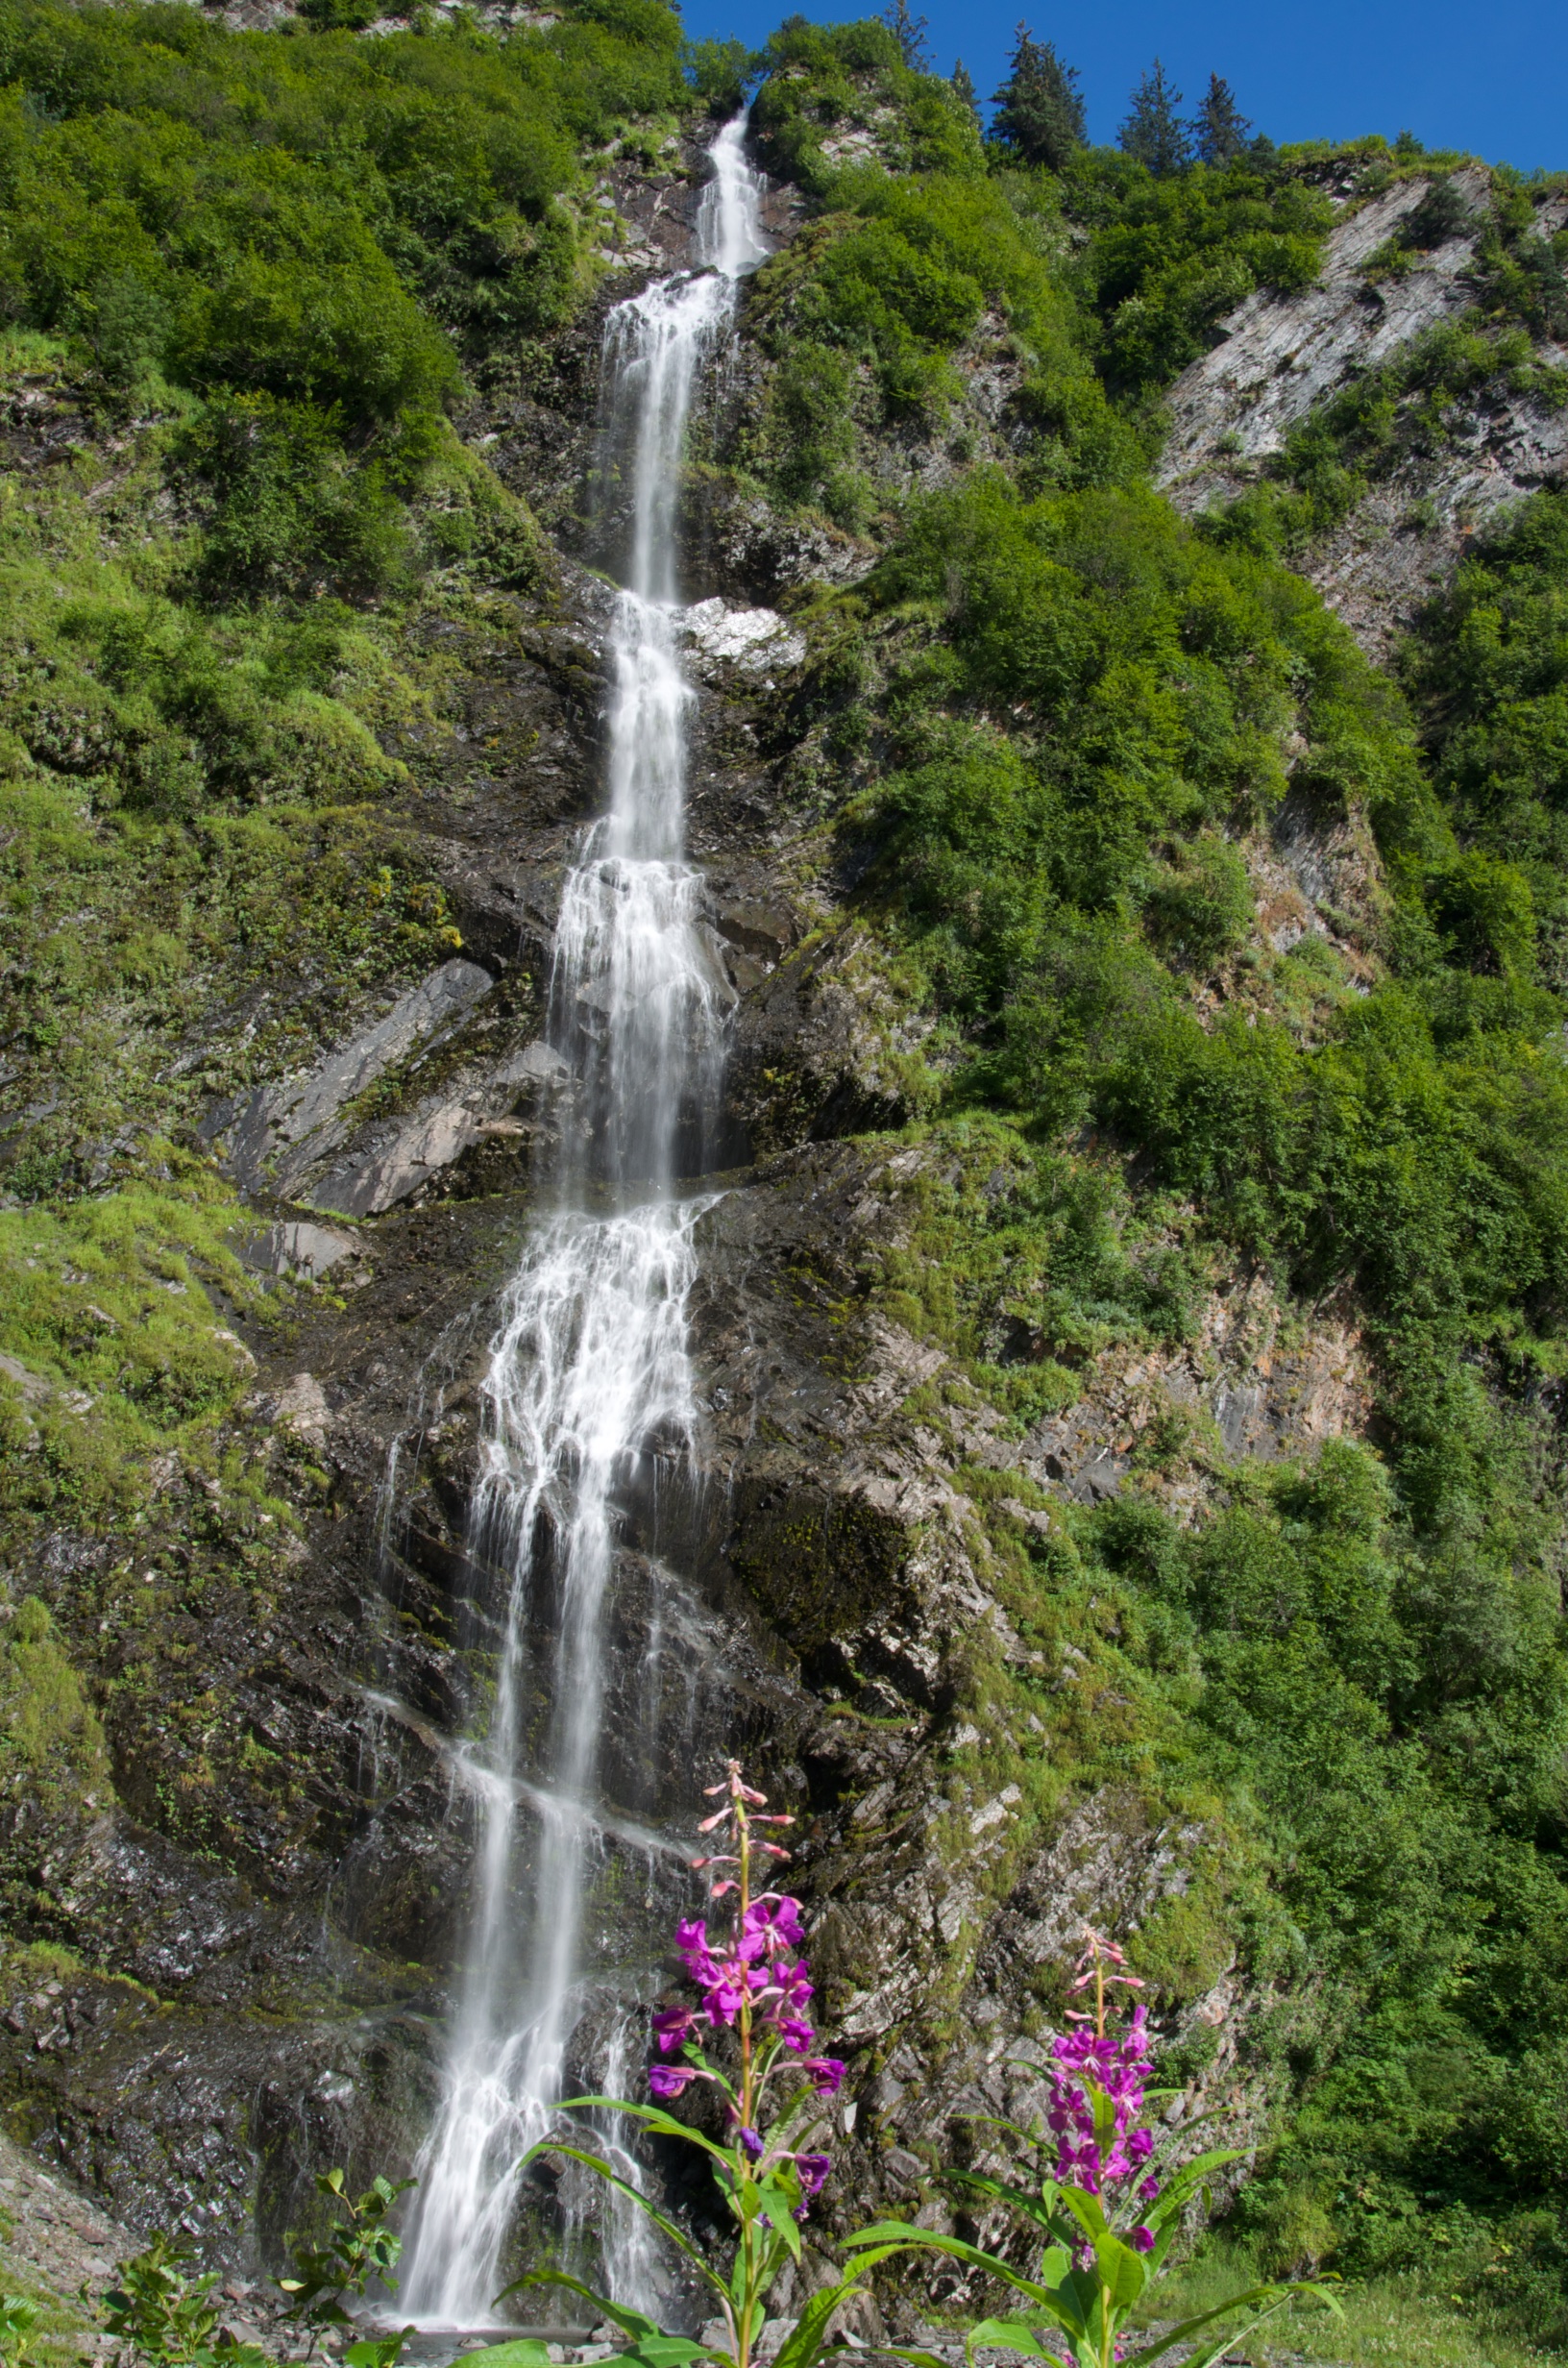  Bridal Veil Falls, Keystone Canyon, near Valdez, Alaska 